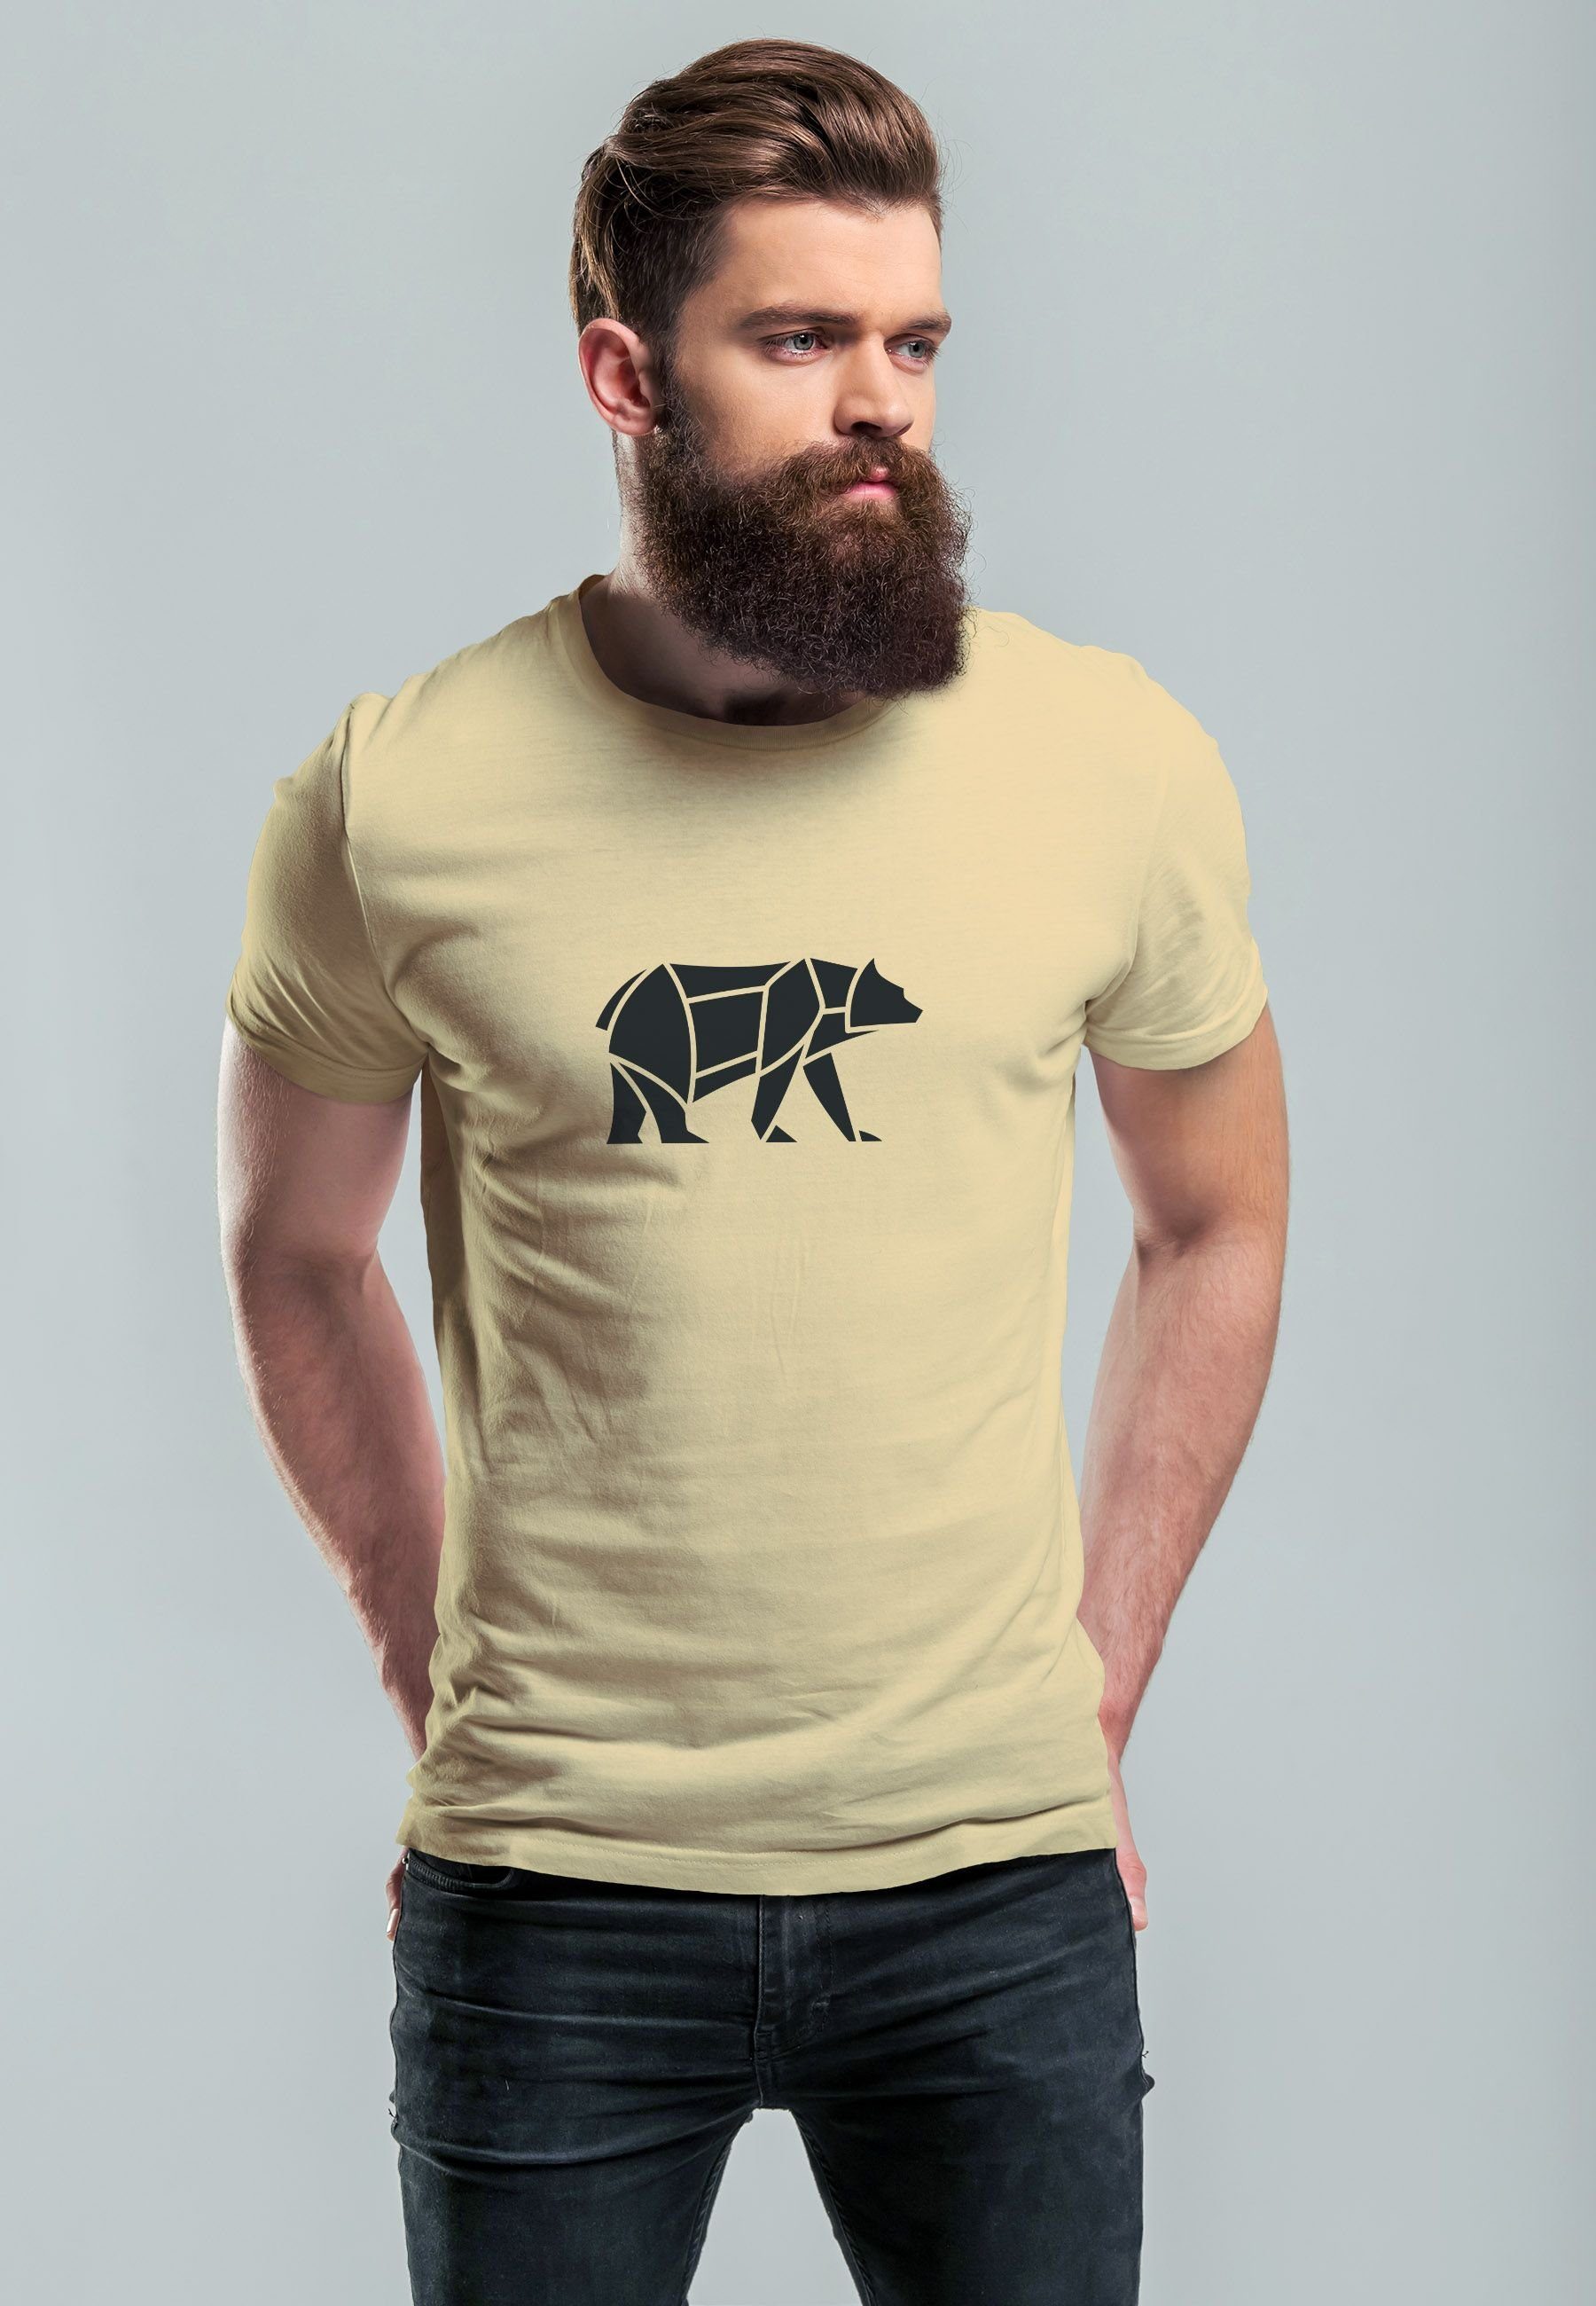 Print T-Shirt Tiermotiv 1 Neverless Herren natur Outdoor Polygon mit Print Polygon Bear Fashion Bär Print-Shirt Design